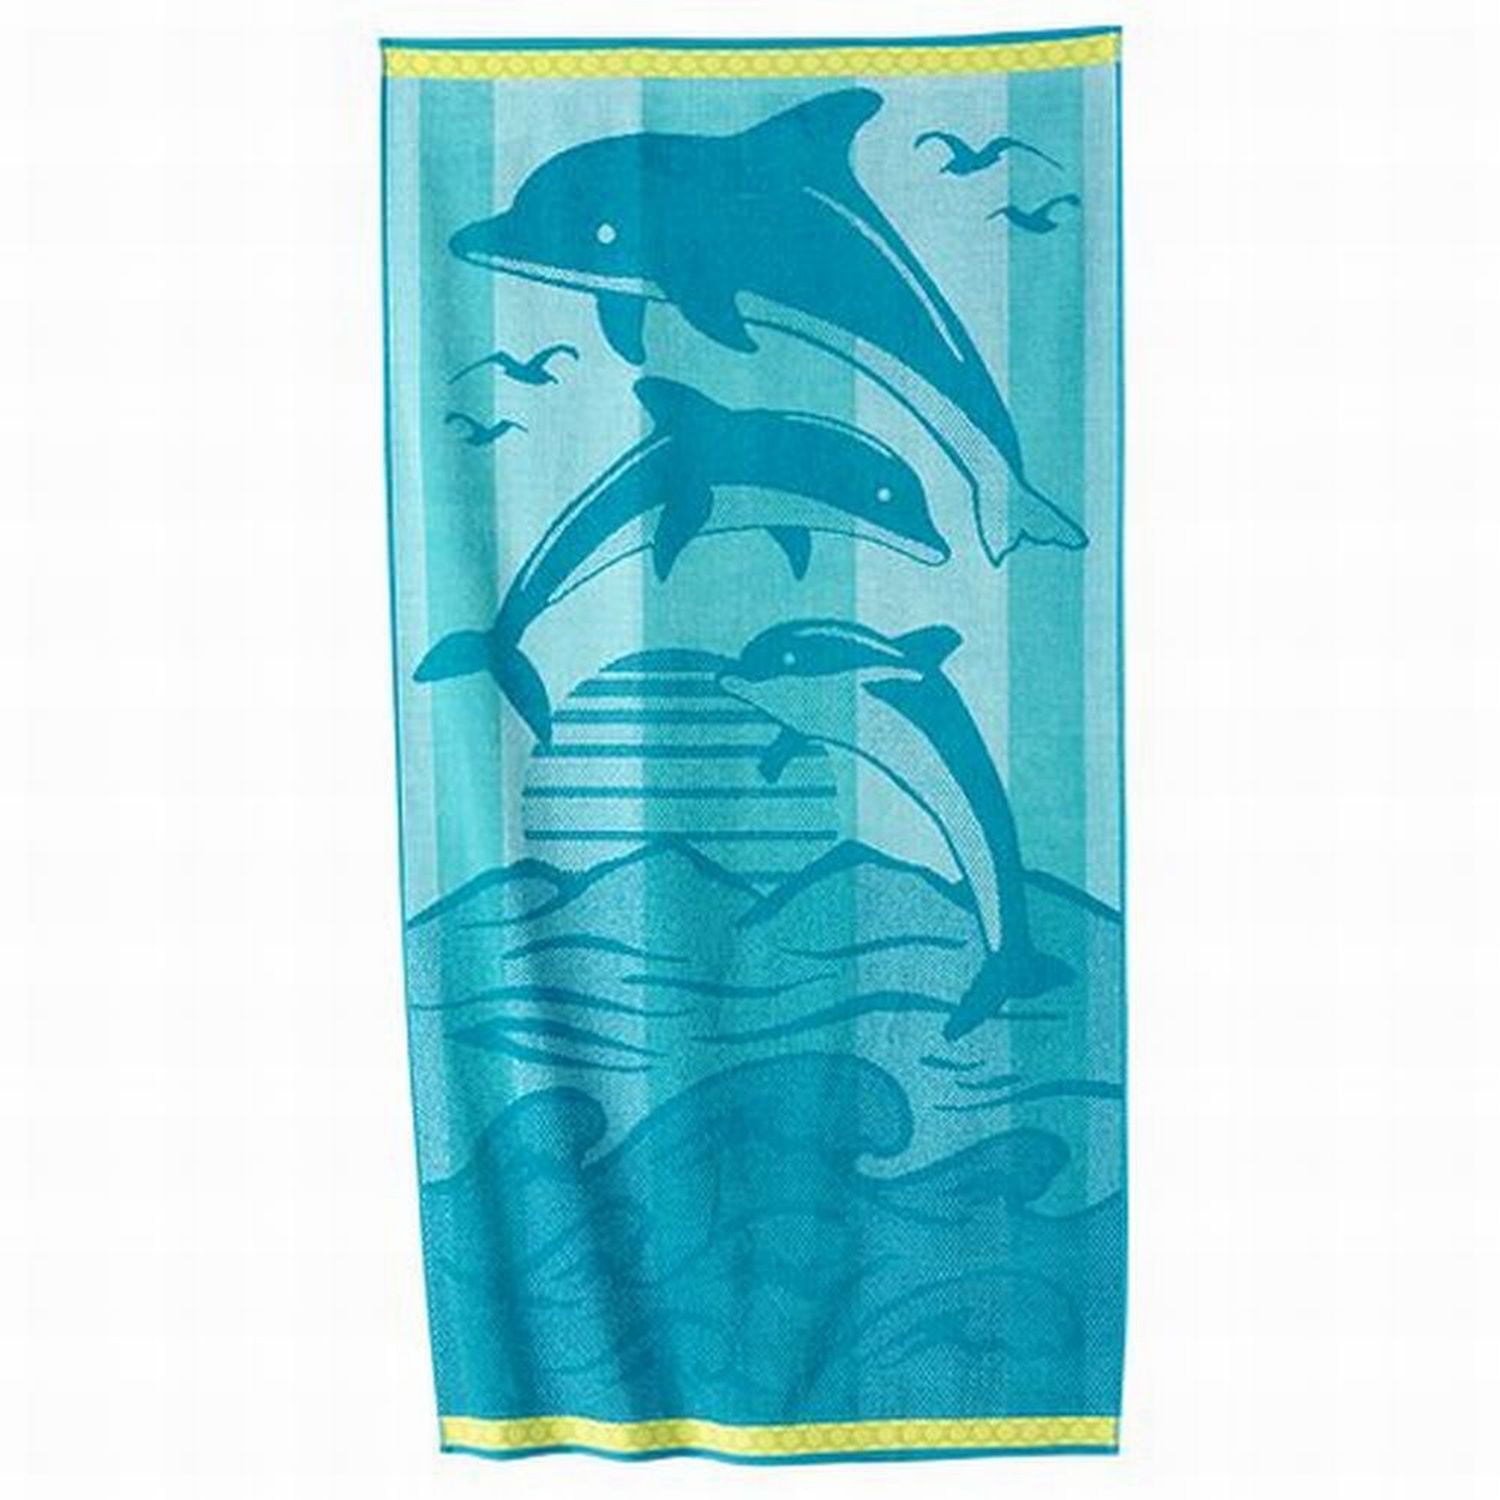 SONOMA Outdoors Velour Beach Towel "Blue Dolphins"100% Cotton 34"x64" NWT $29.99 